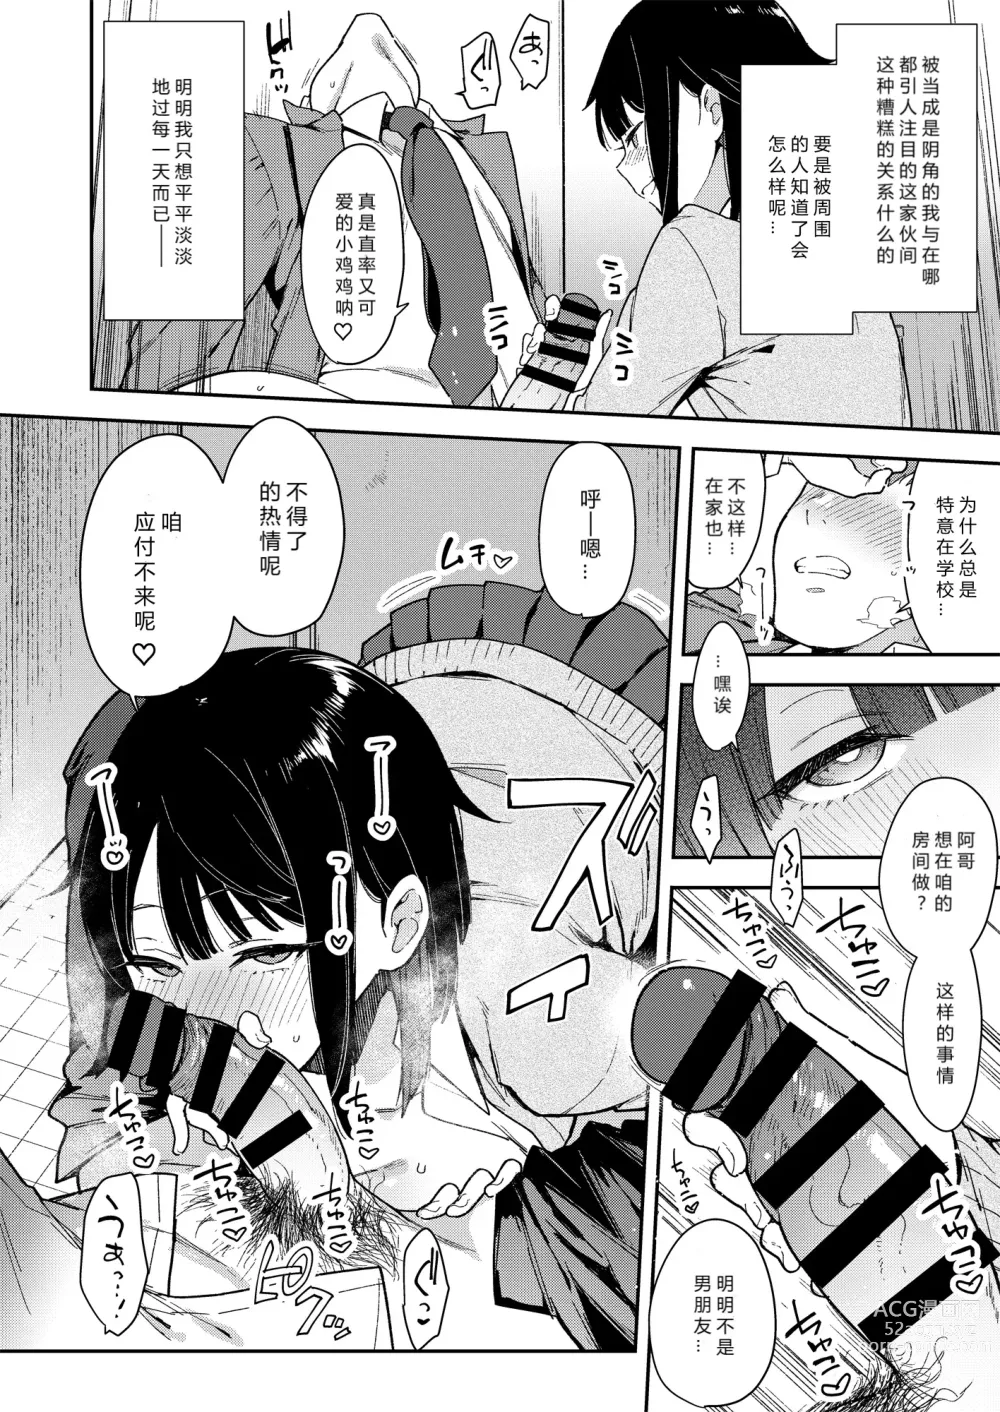 Page 205 of manga 蝶子-総集編